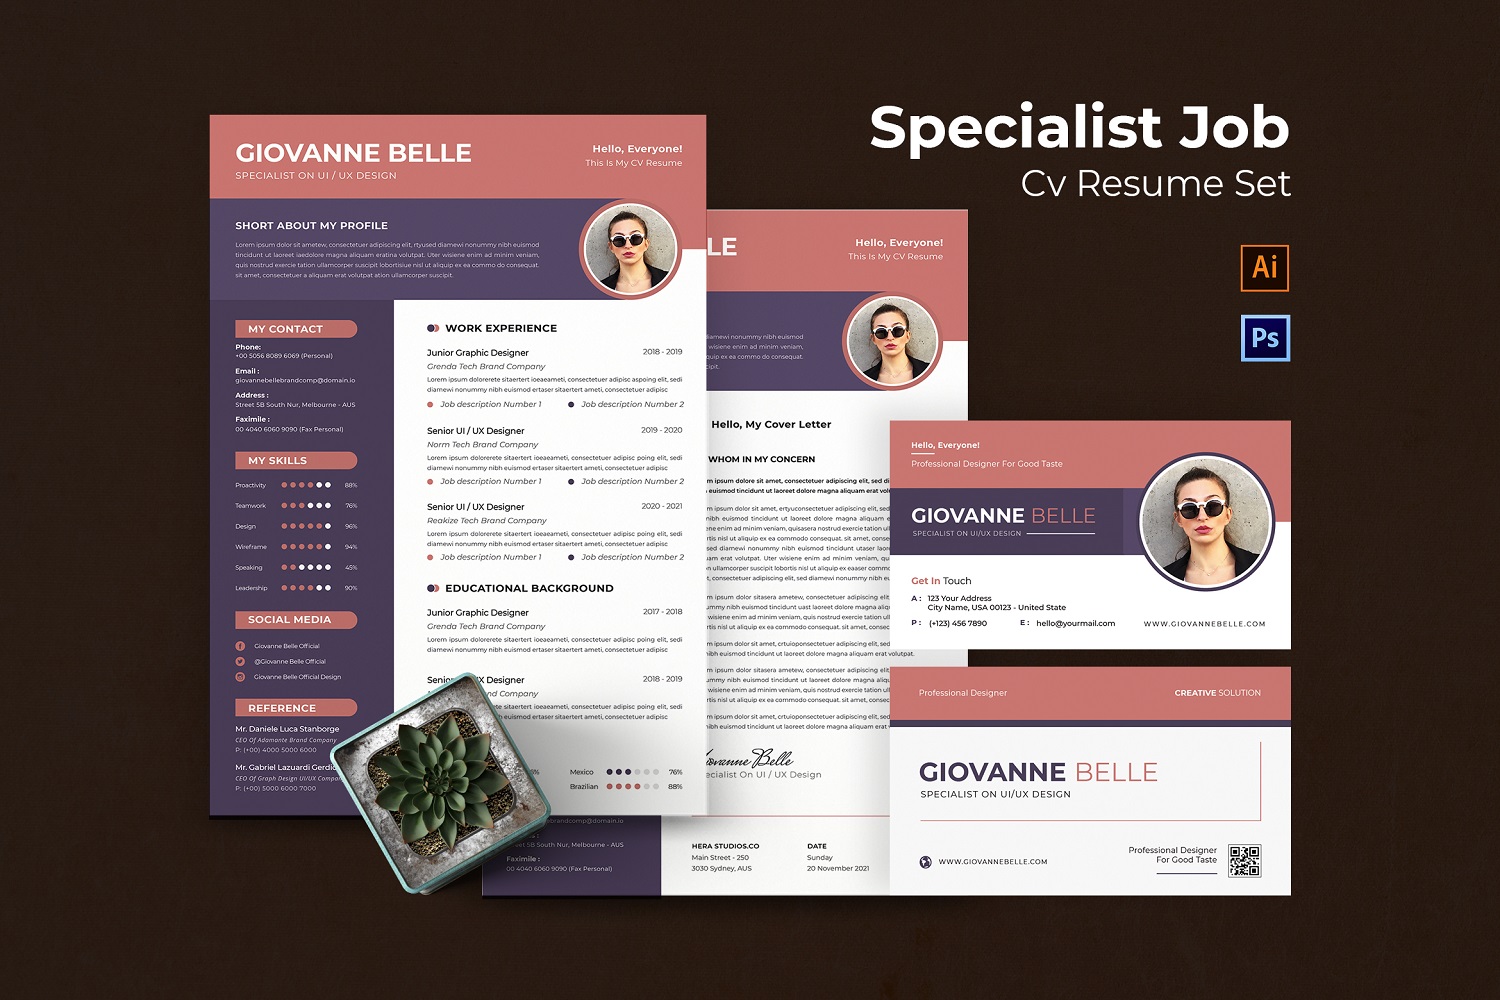 Specialist Job CV Resume Set